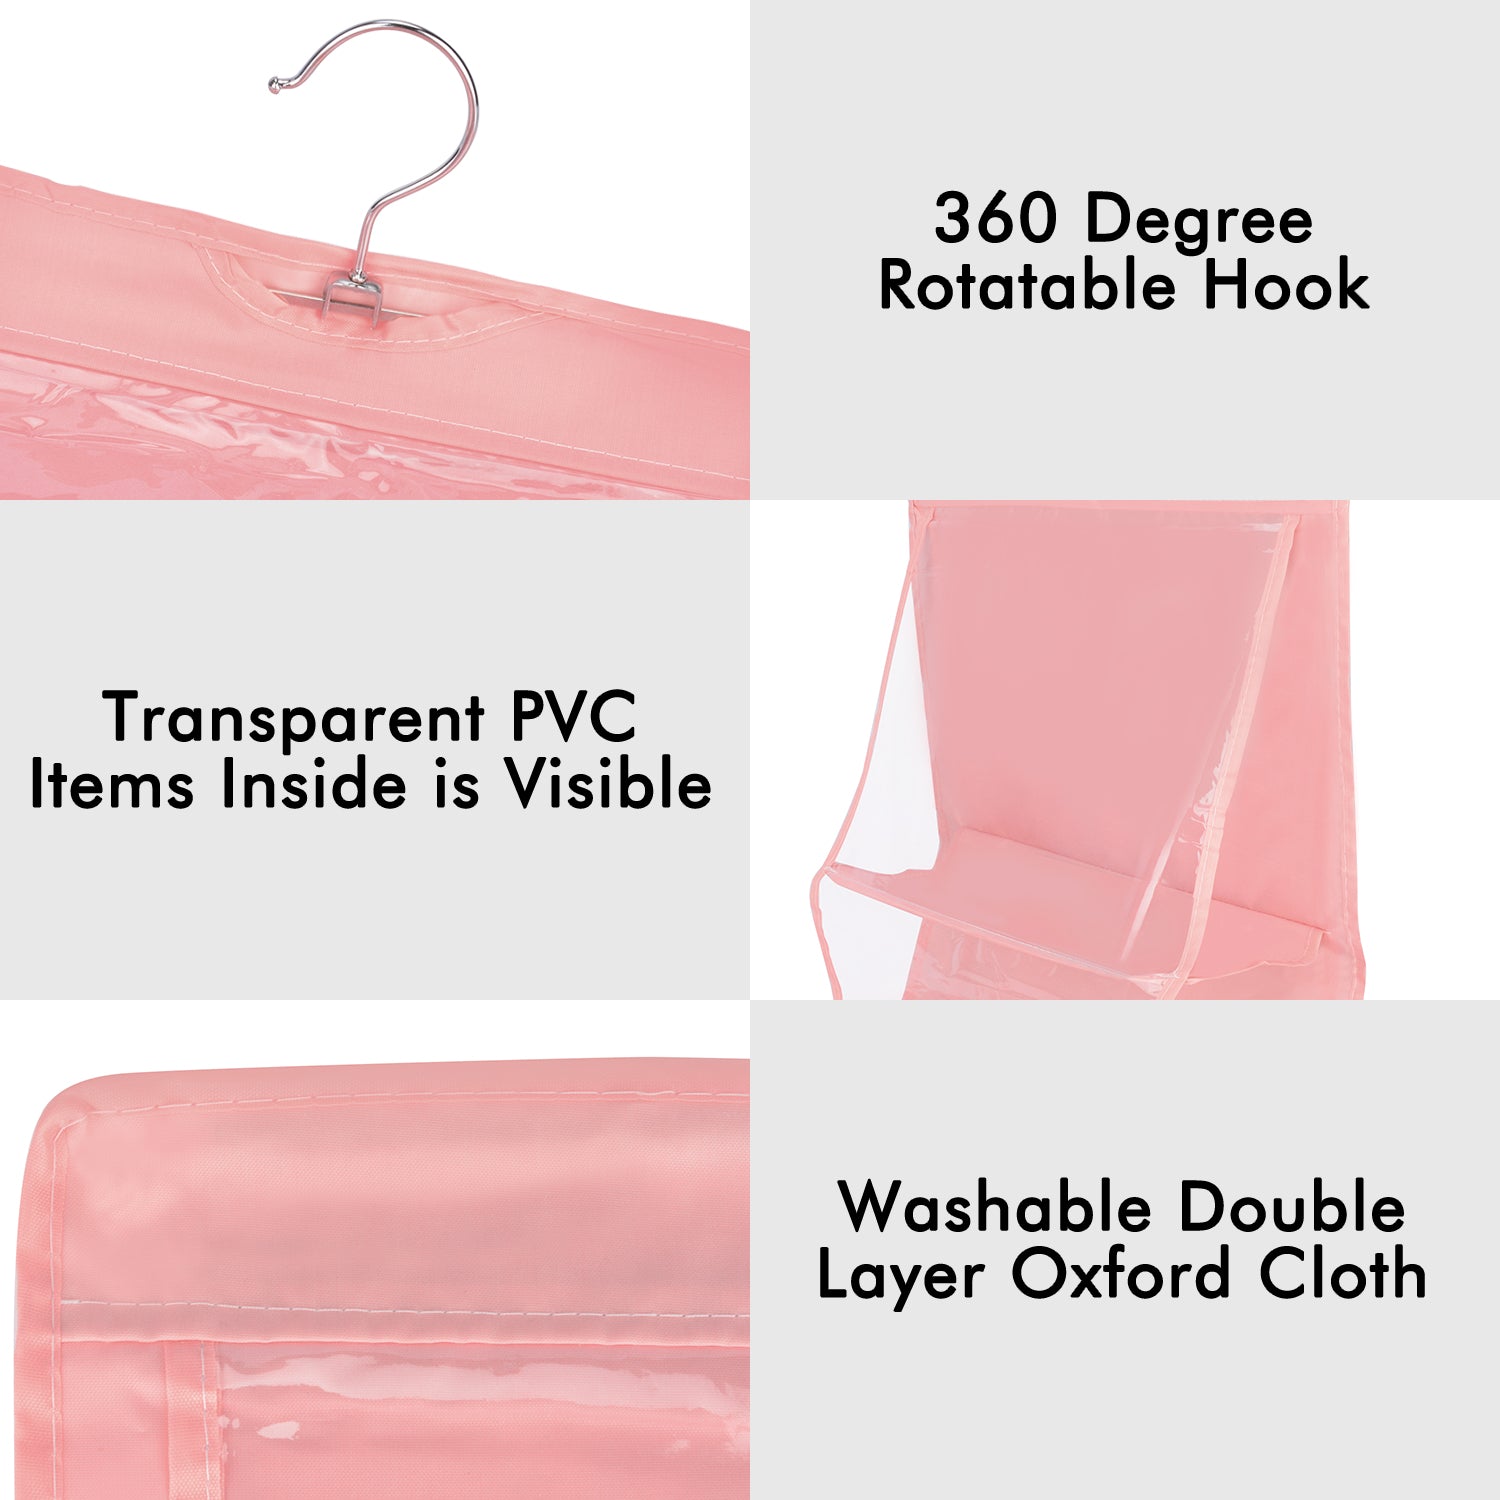 2-Pack Handbag Hanging Organizer with 8 Pockets